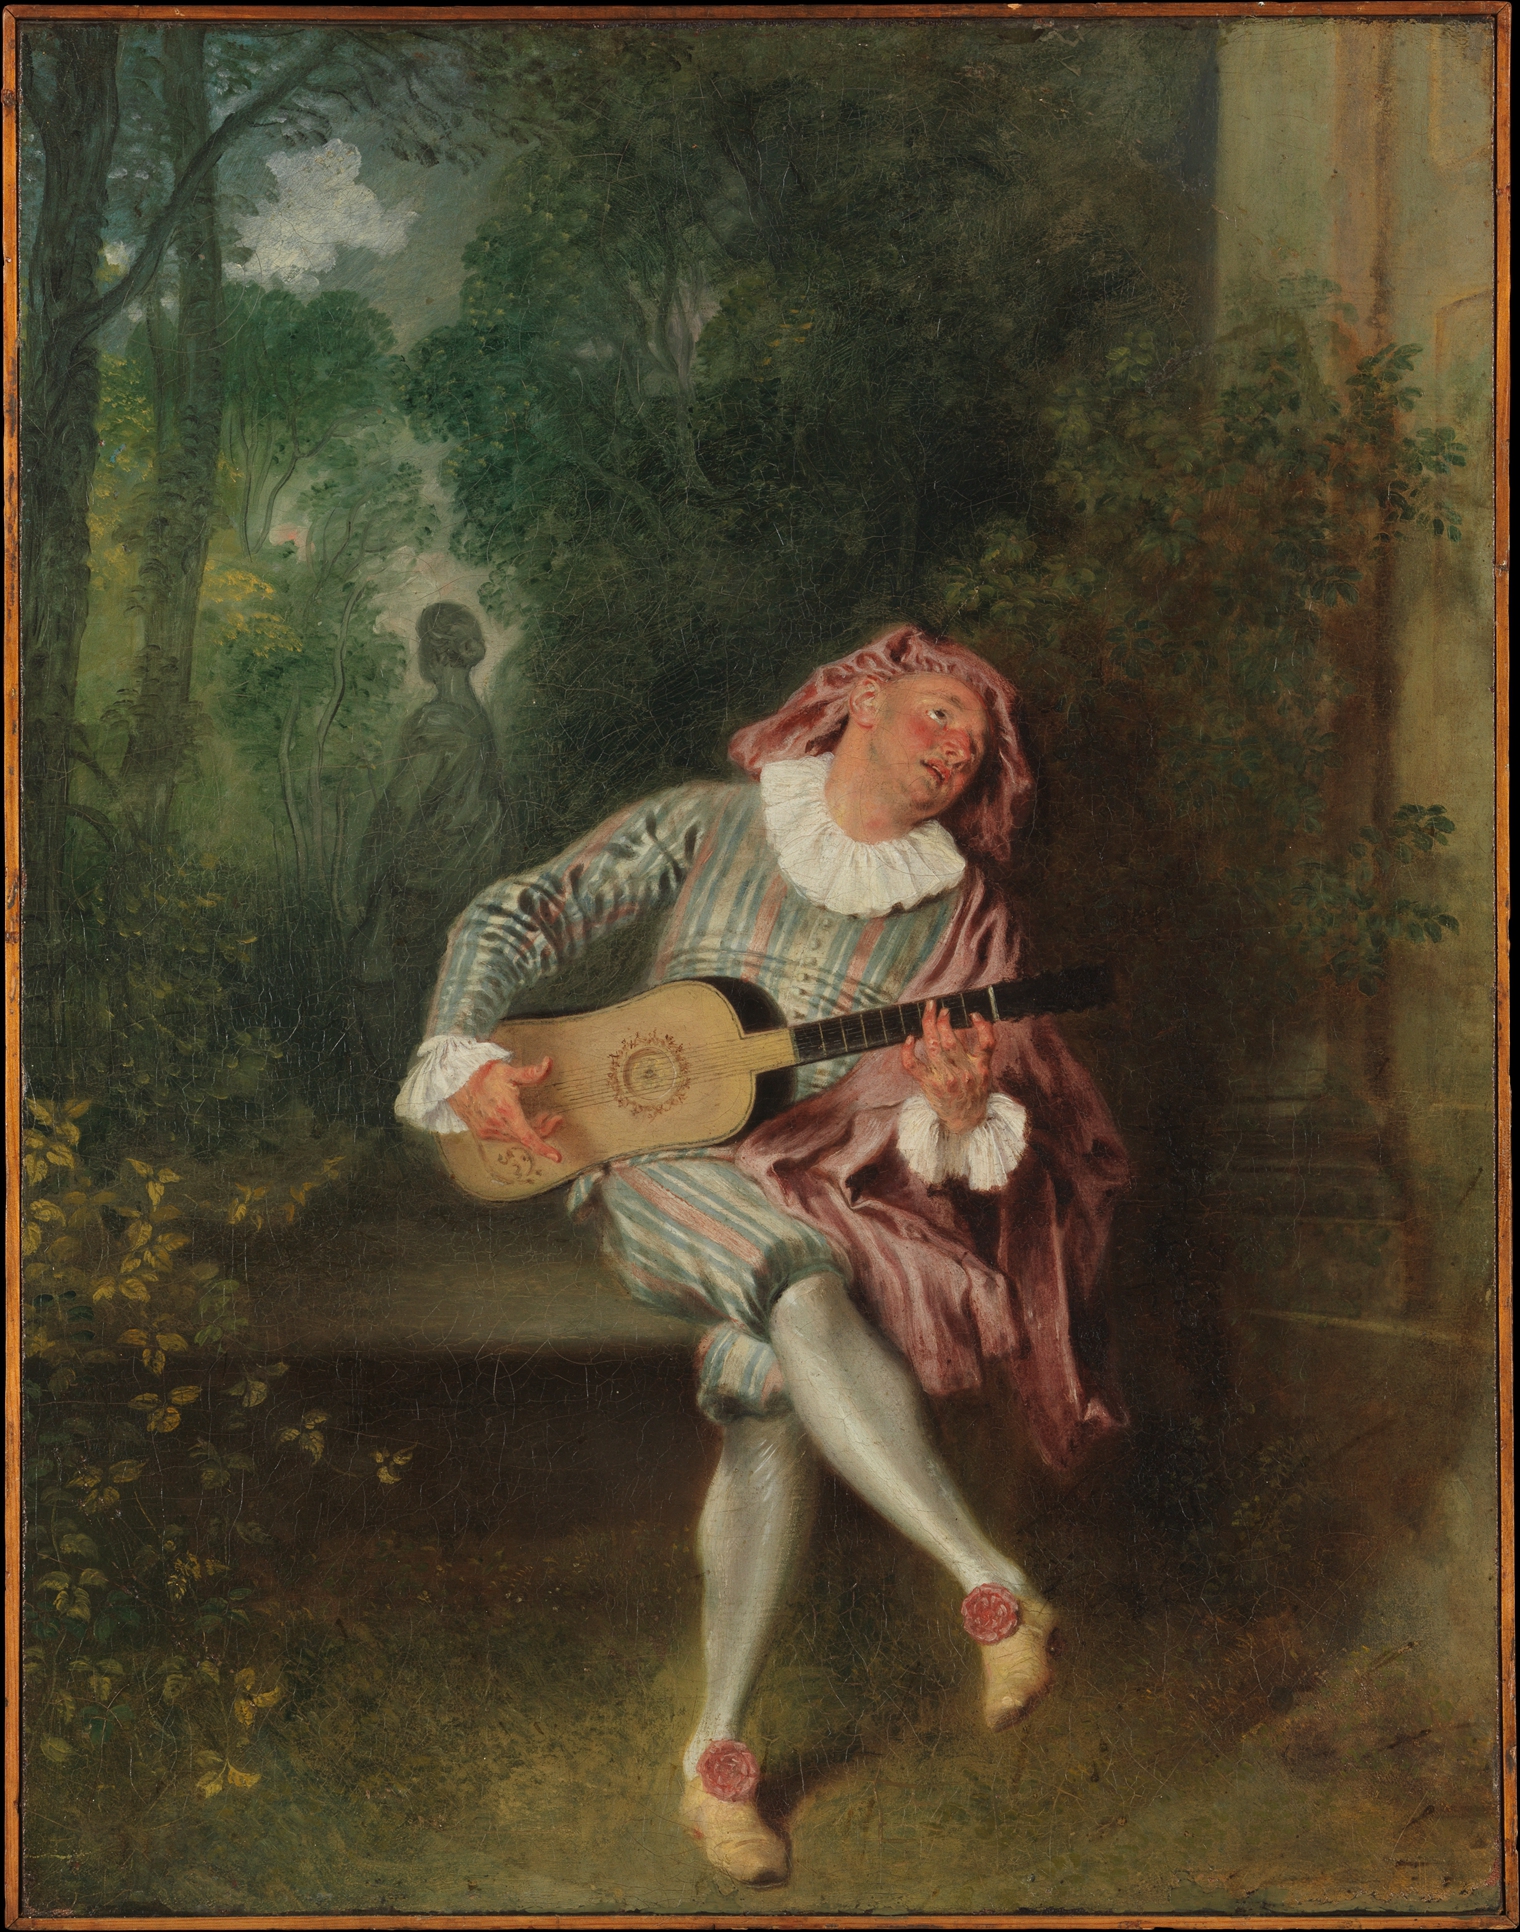 Mezzetino by Antoine Watteau - ca. 1718-1720 - 55.2 x 43.2 cm Museo Metropolitano de Arte